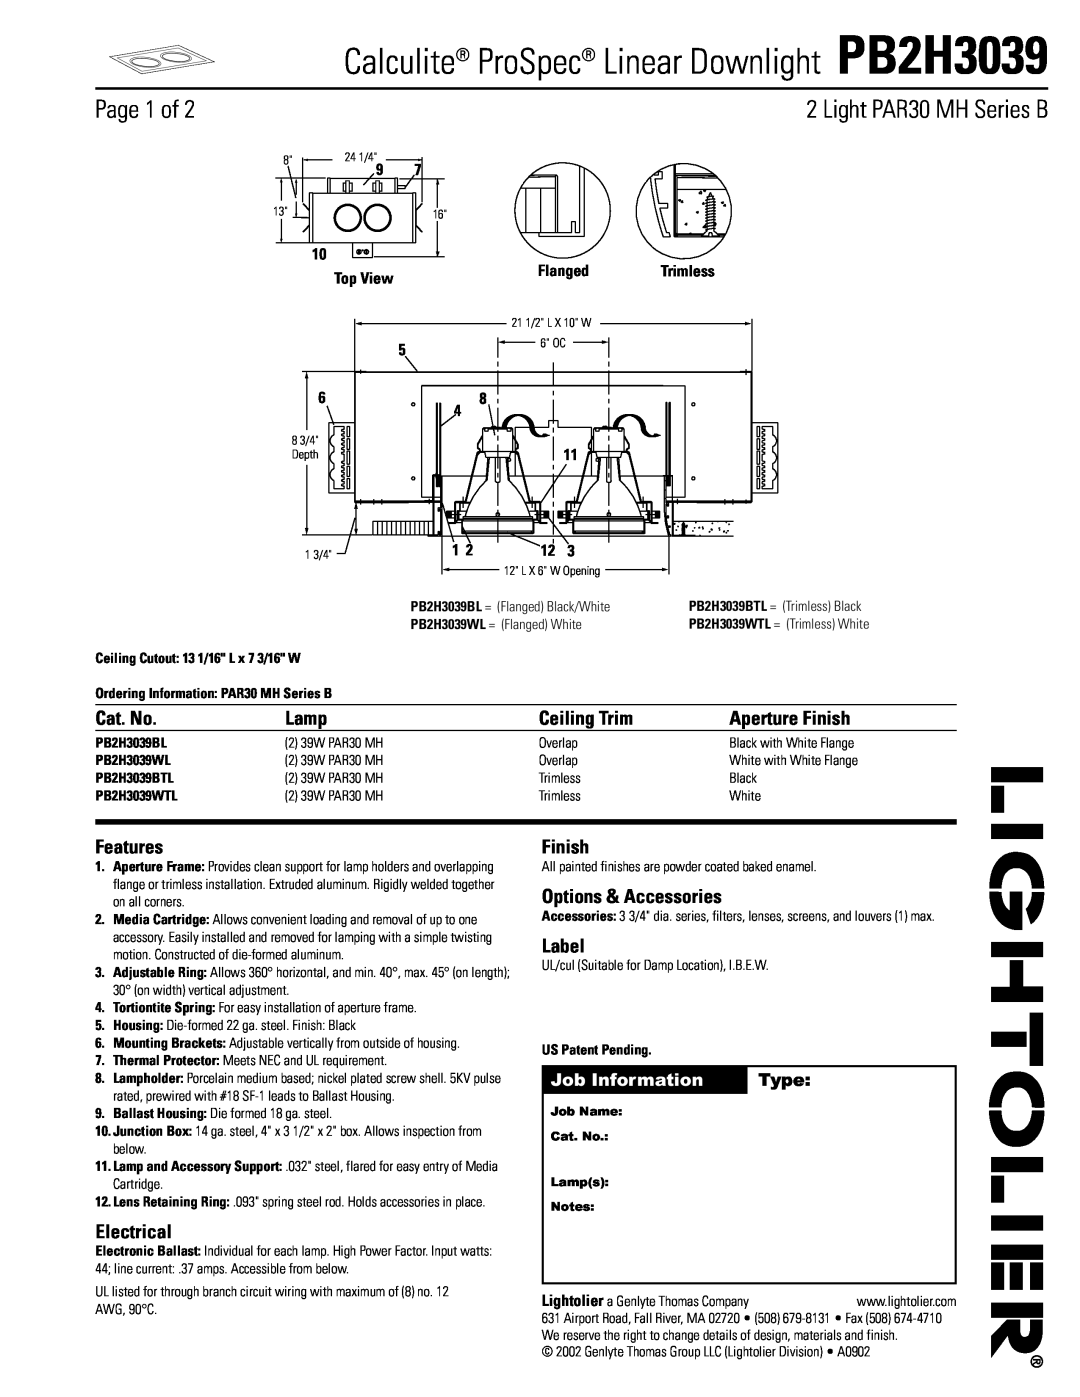 Lightolier manual Calculite ProSpec Linear Downlight PB2H3039, Page 1 of, Cat. No, Lamp, Ceiling Trim, Aperture Finish 